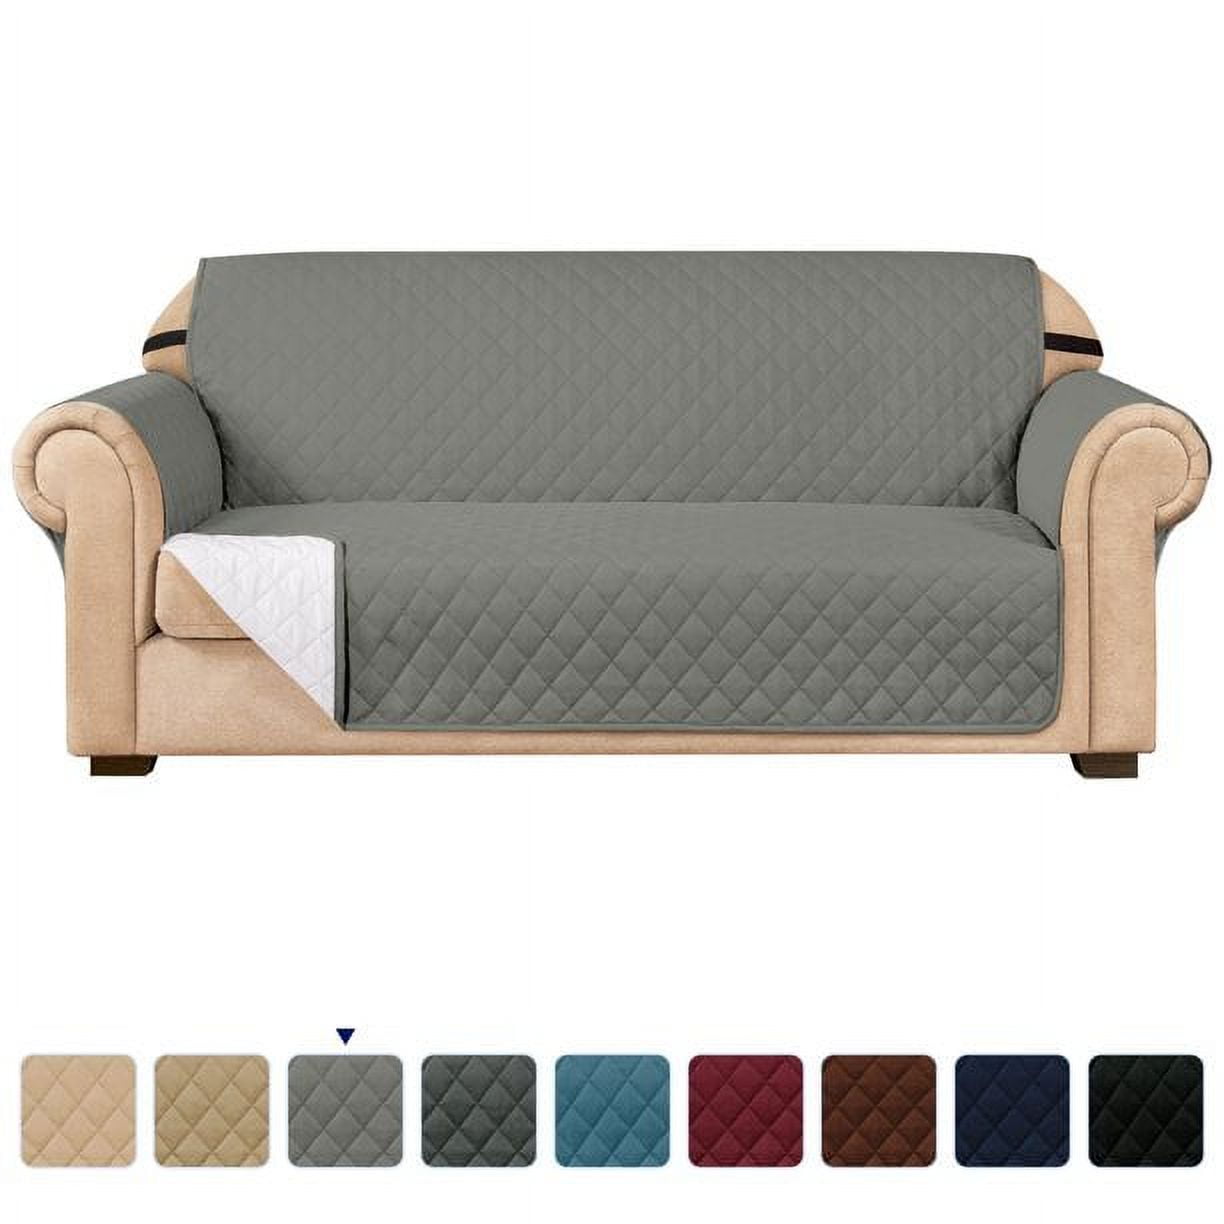 1pack/5pairs Sofa Cushion & Bedsheet Anti-skid Fixator